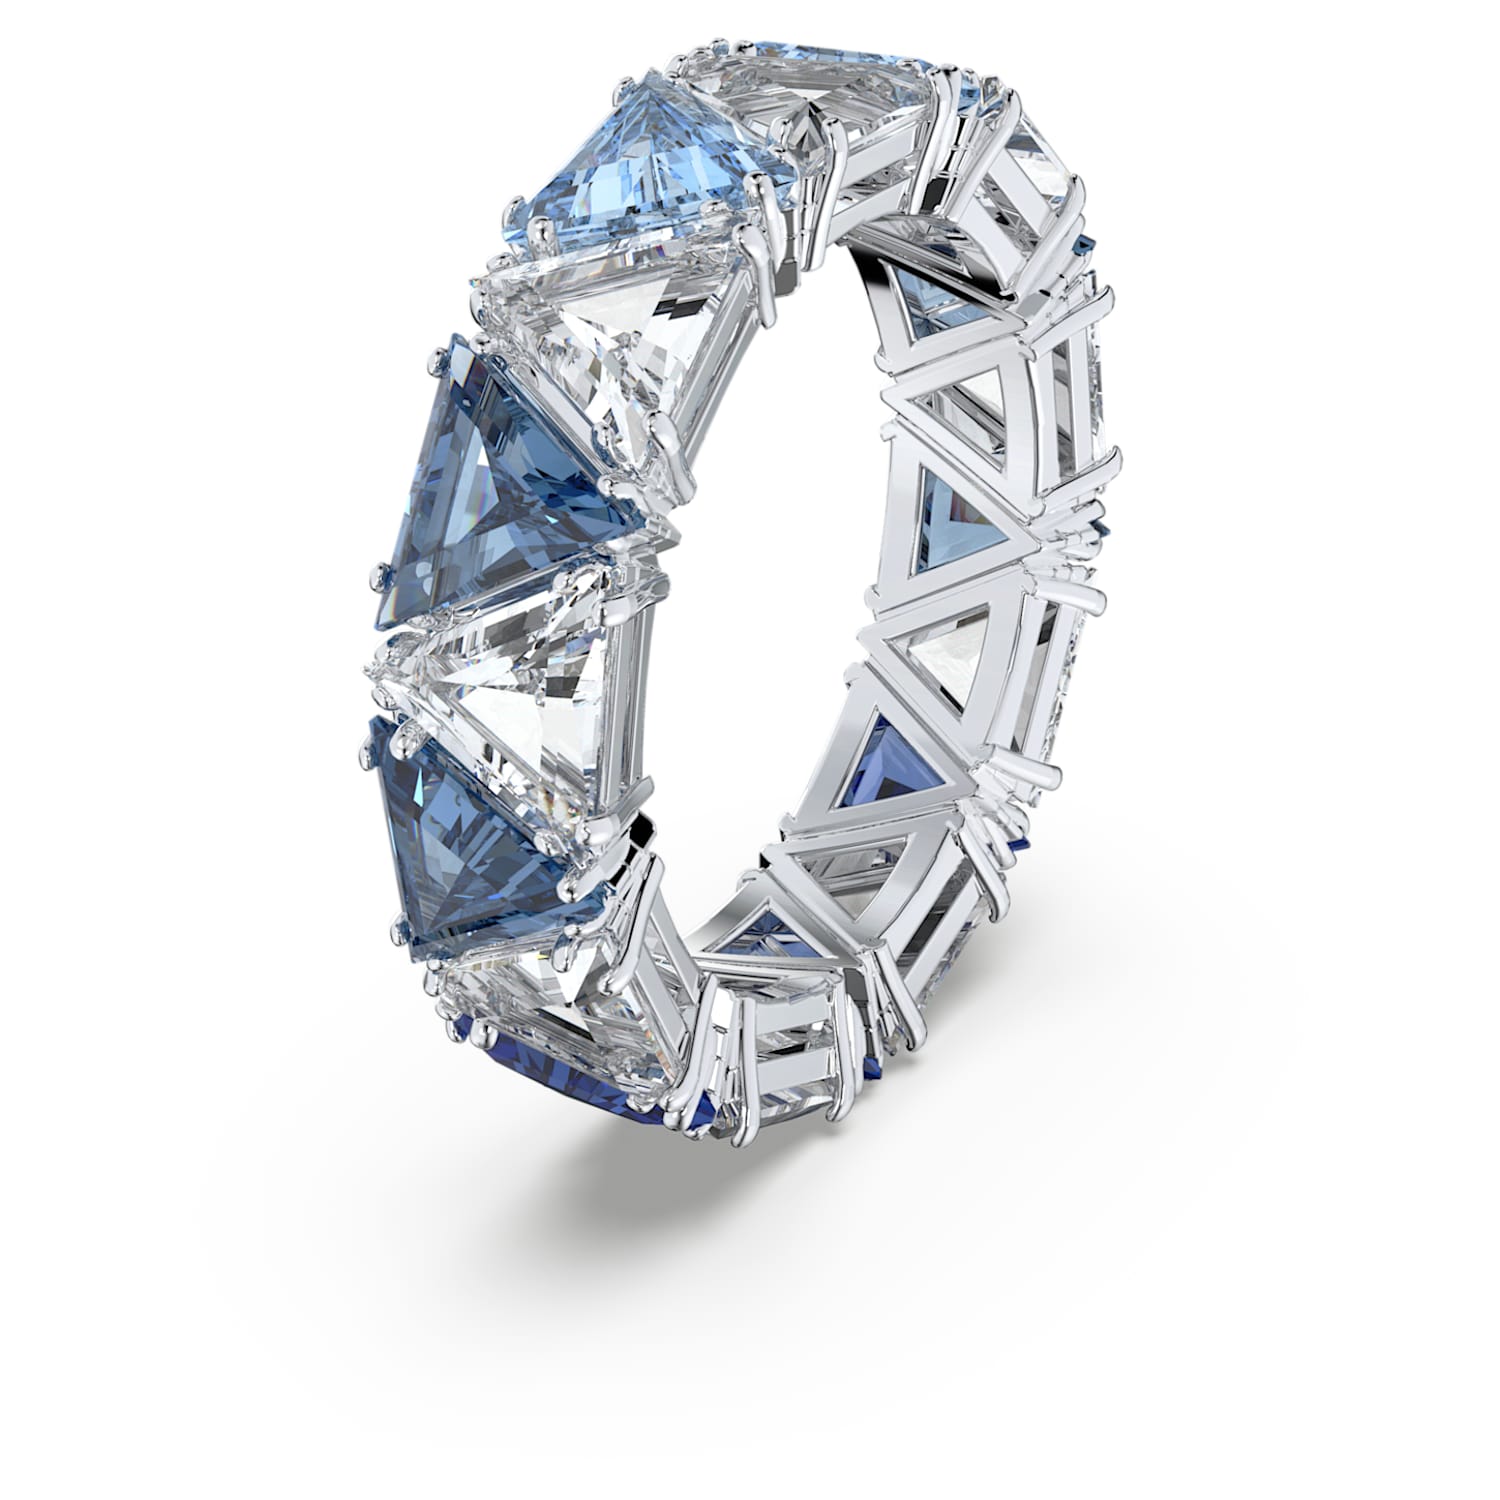 WildKlass Crystalline Sculpture Cocktail Ring 